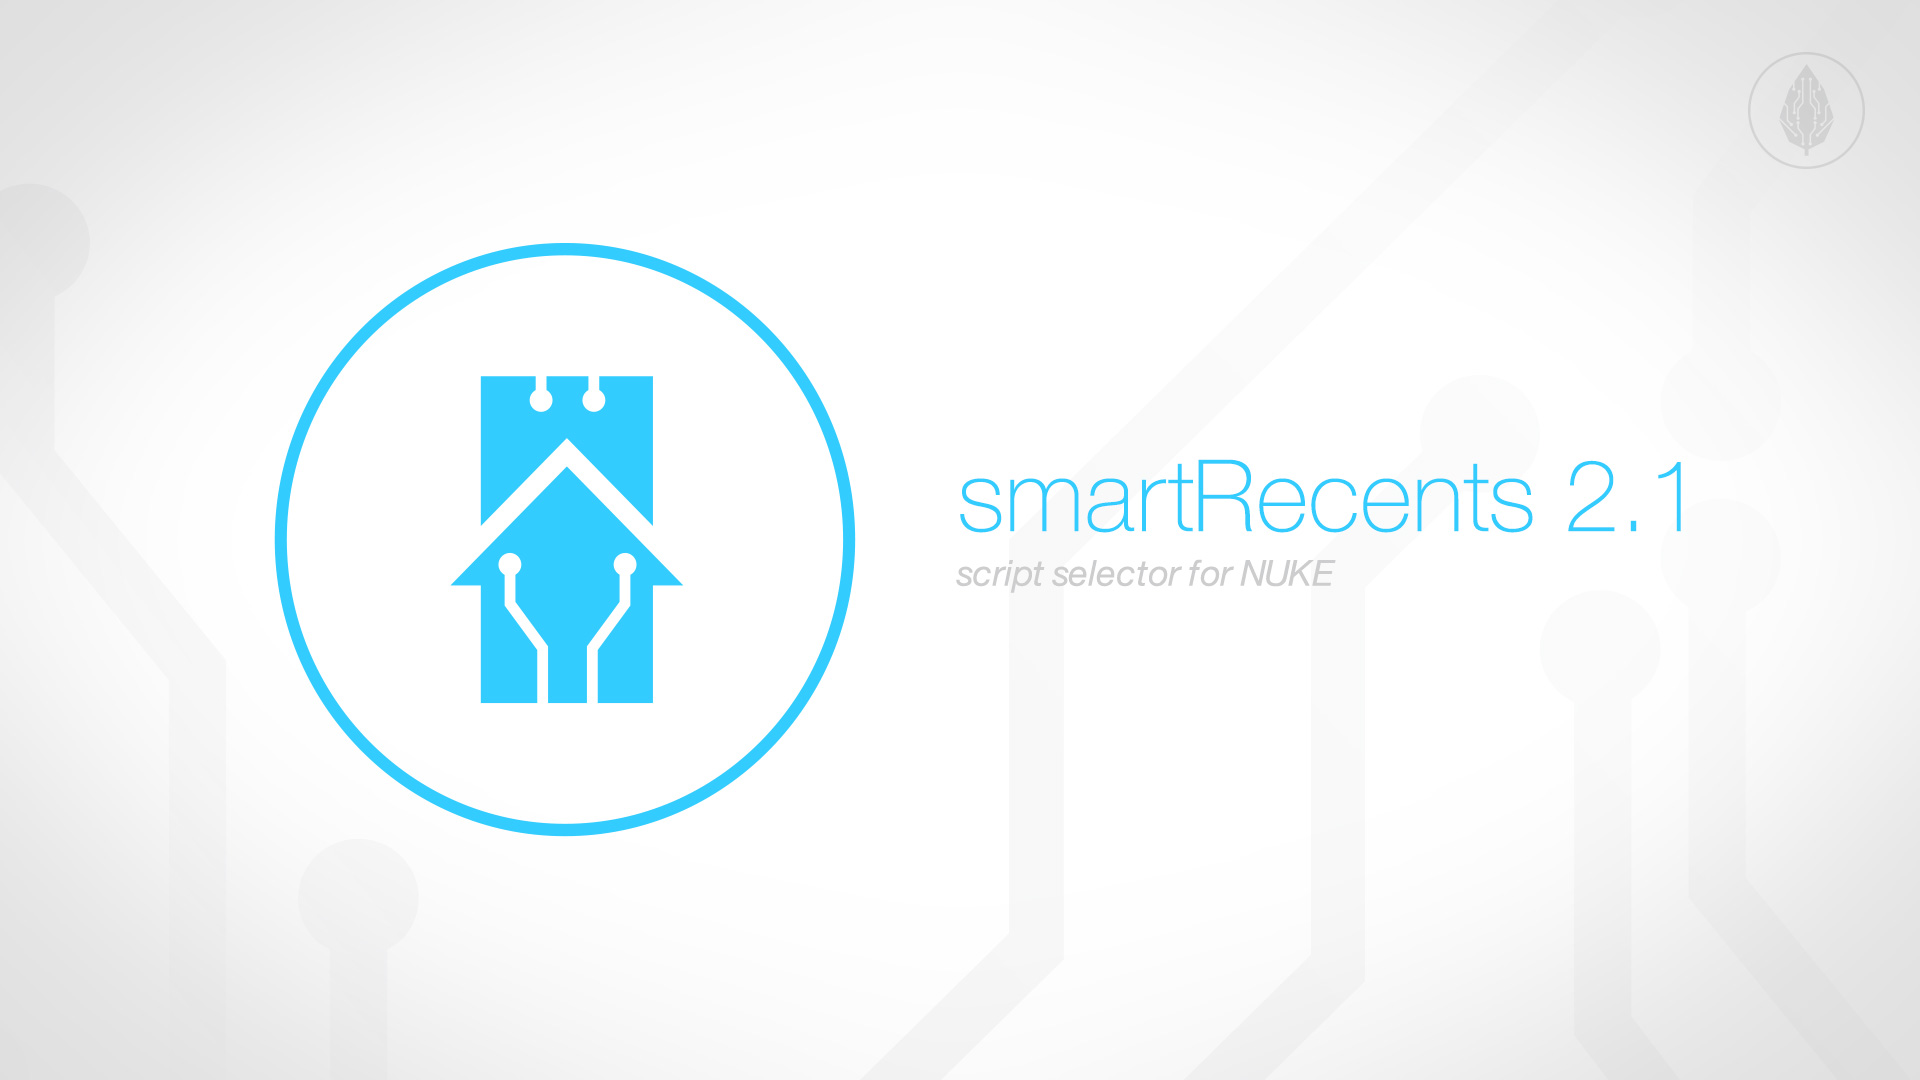 smartRecents 2.1